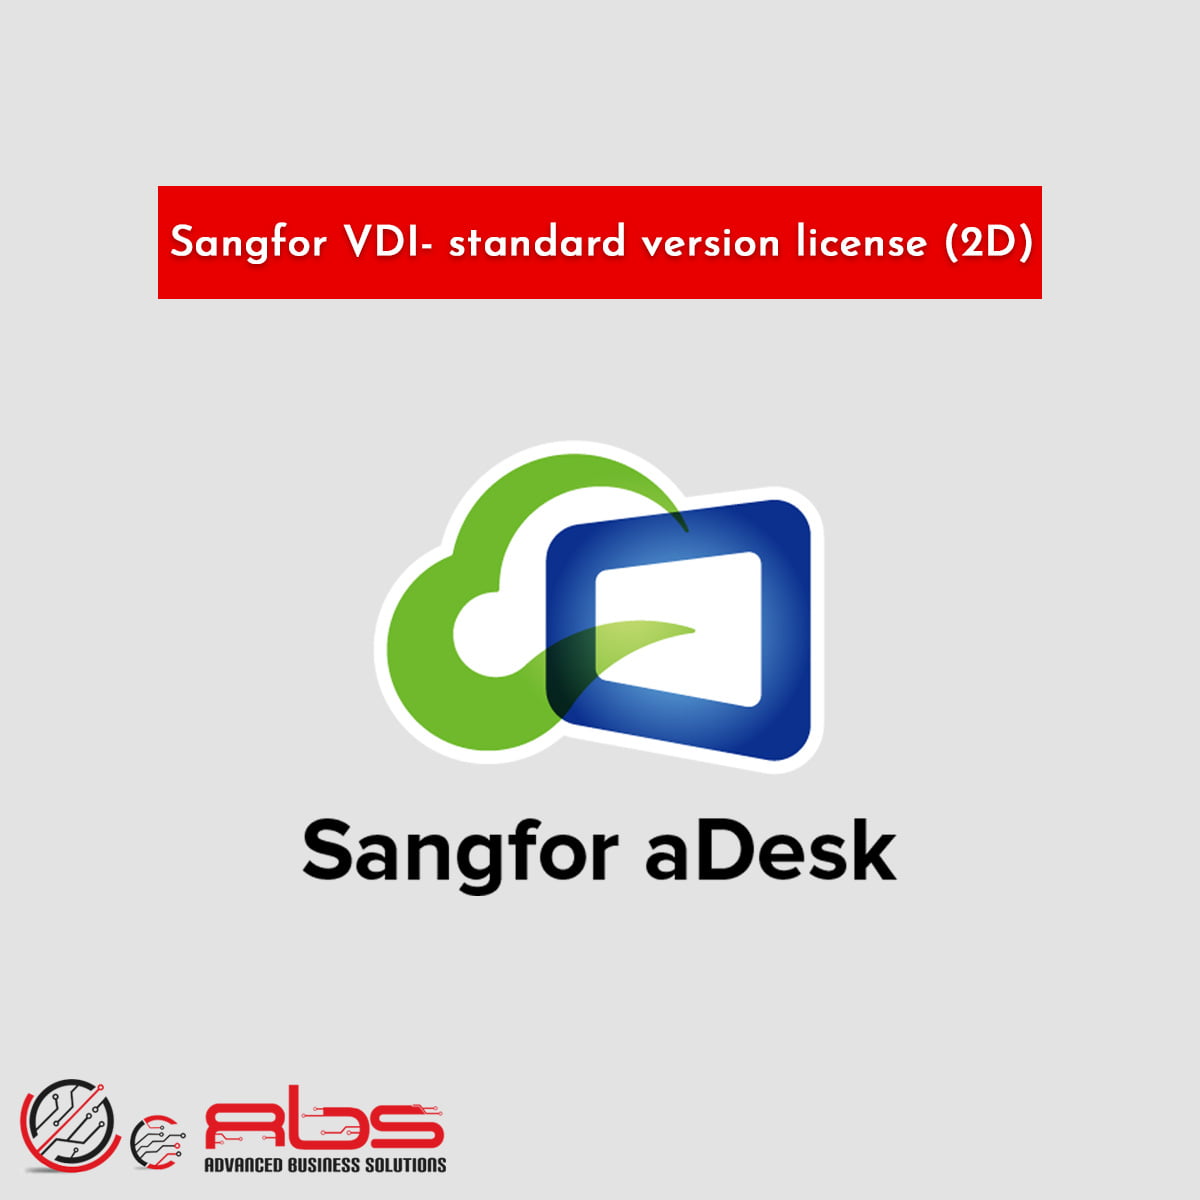 Sangfor VDI- standard version license (3D)